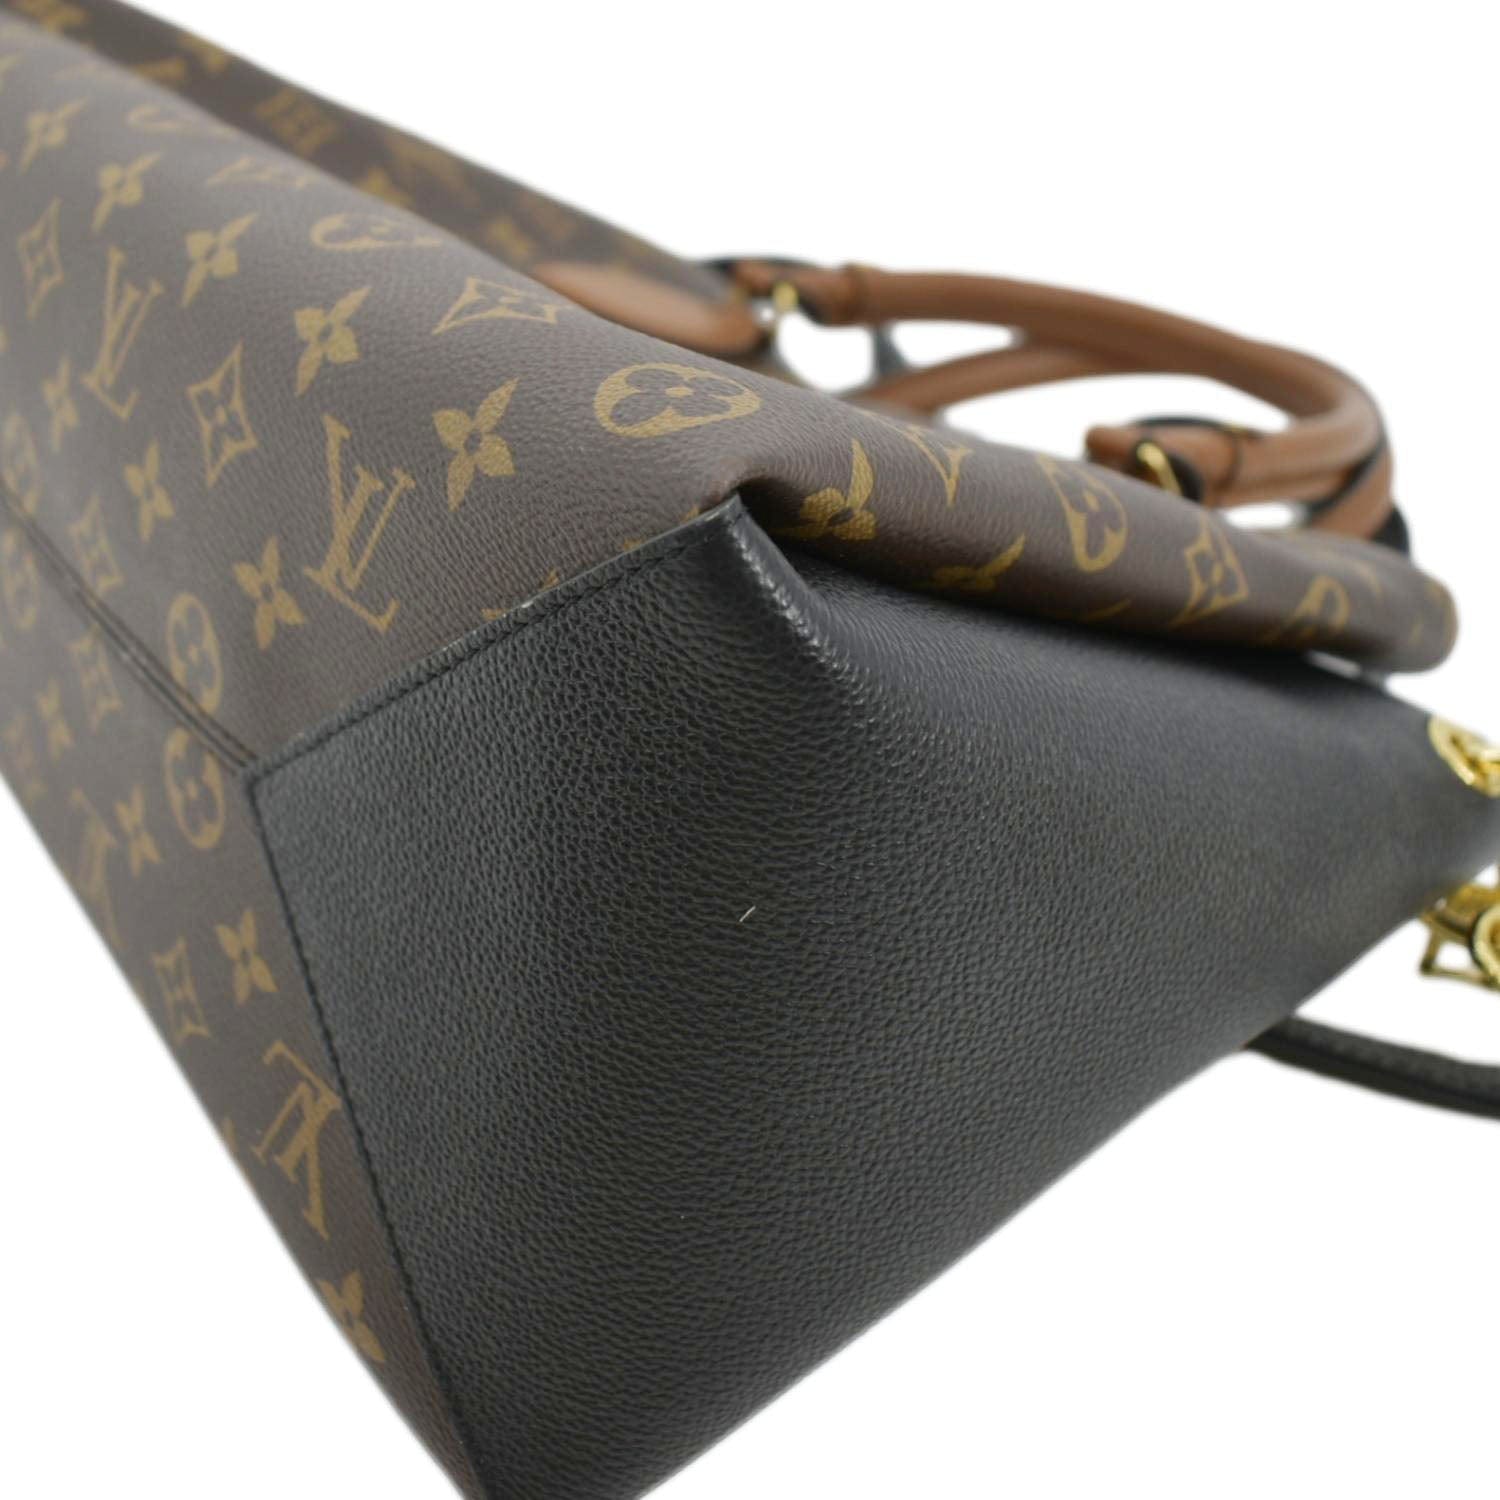 Louis Vuitton Satchel/Top Handle Bag Black Bags & Handbags for Women, Authenticity Guaranteed